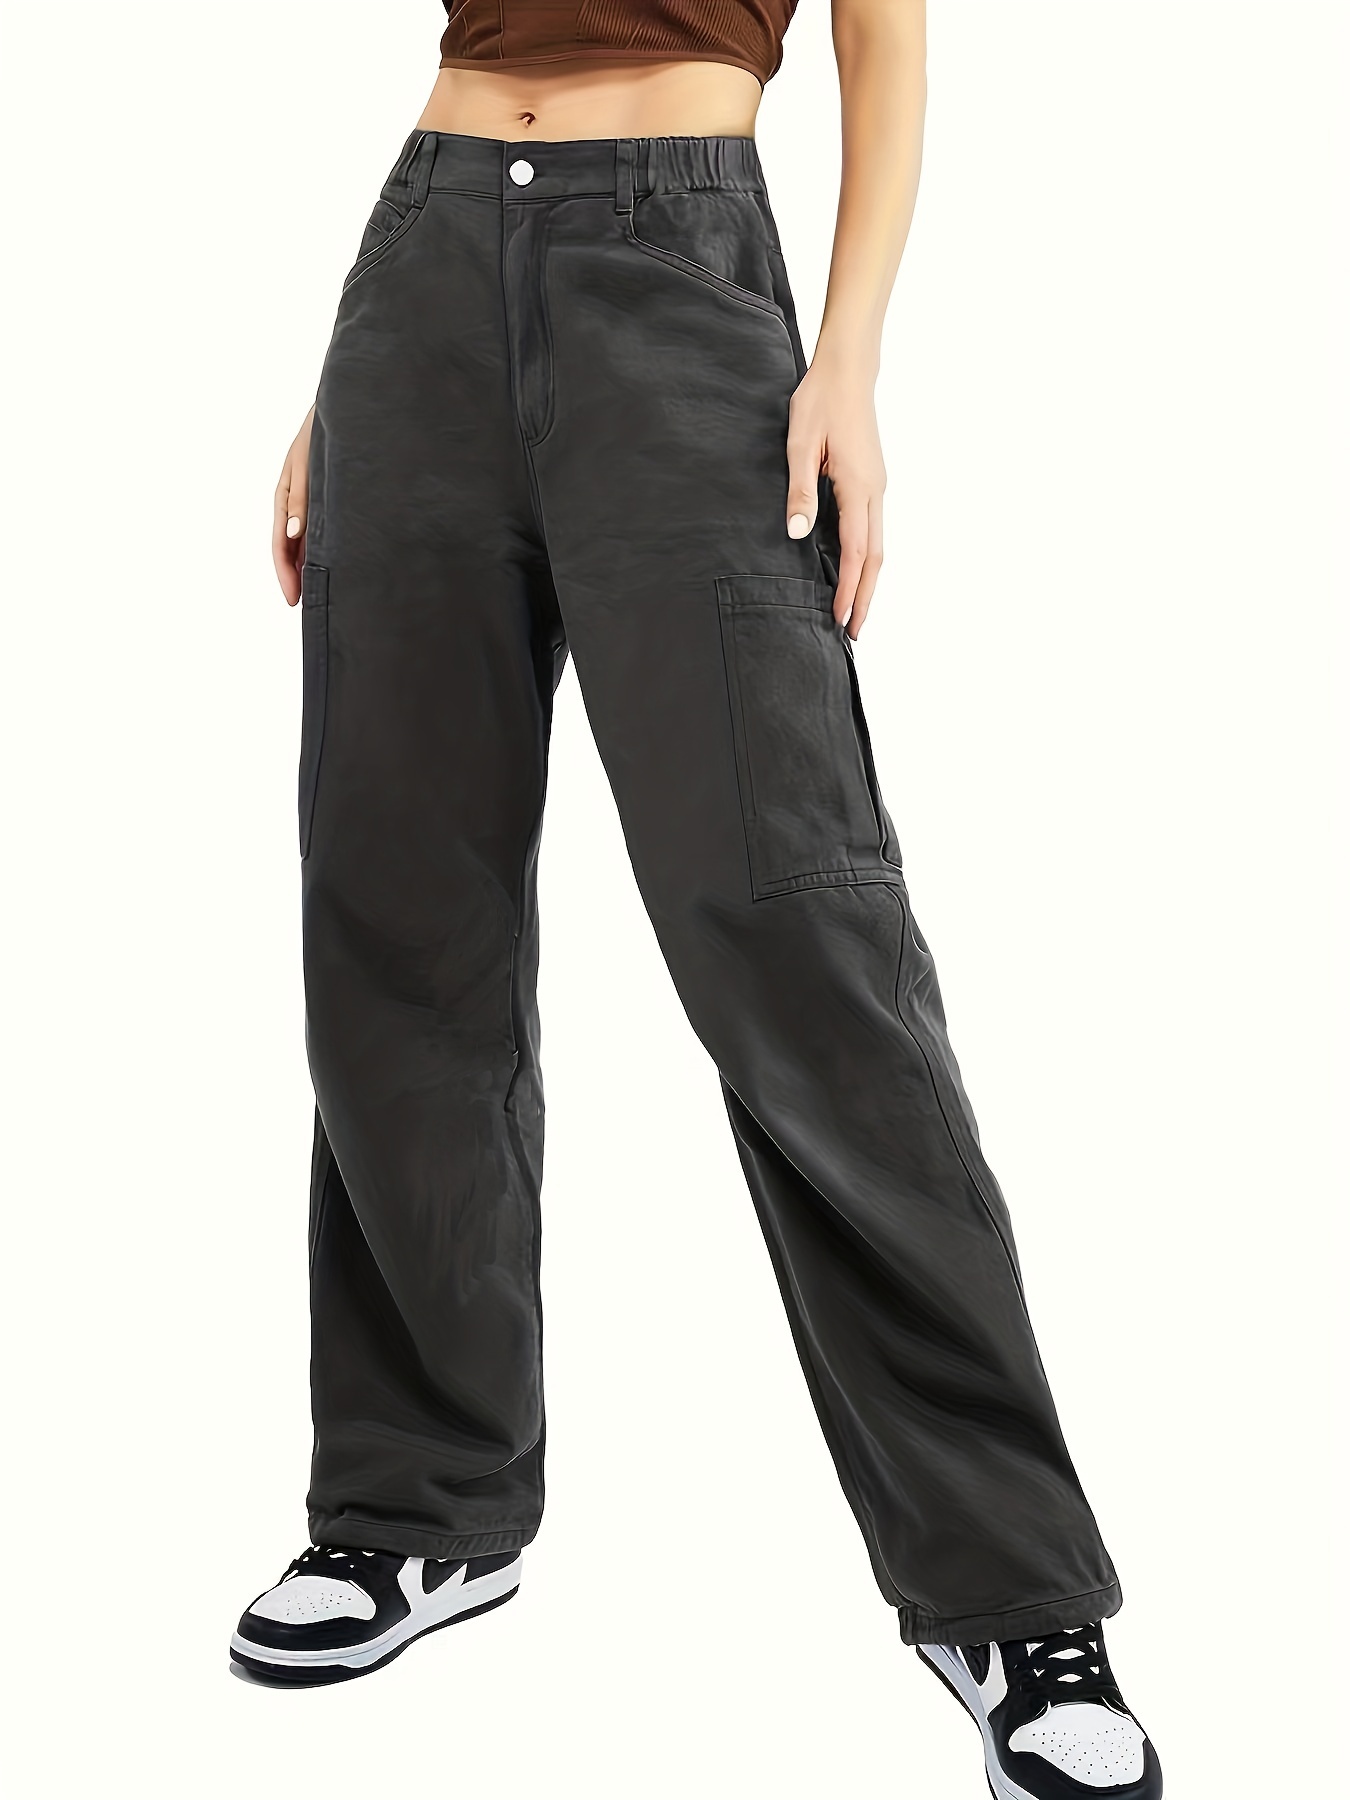 Black Multi-Pockets Cargo Pants, Loose Fit Elastic Waist Casual Straight  Jeans, Women's Denim Jeans & Clothing